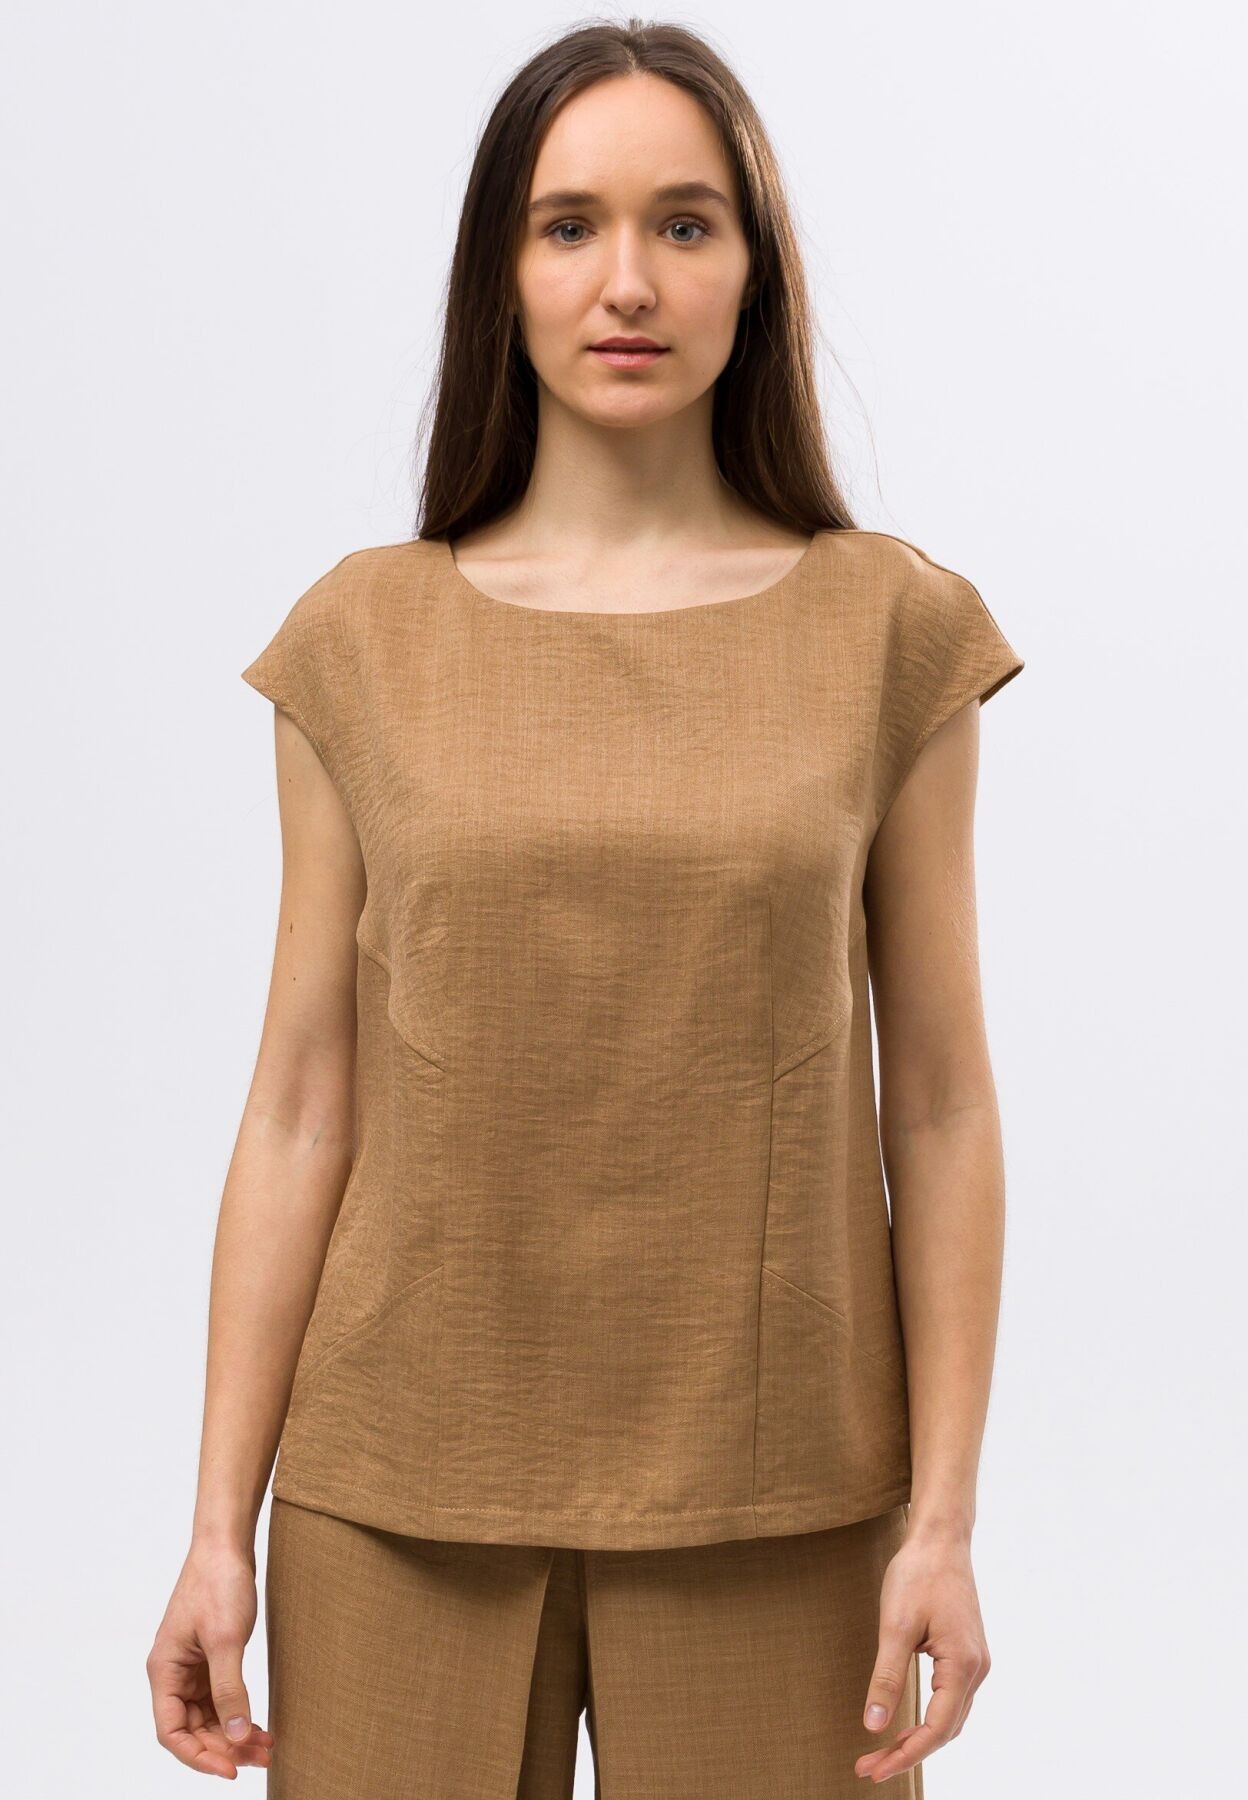 1289 lightweight off-the-shoulder blouse top